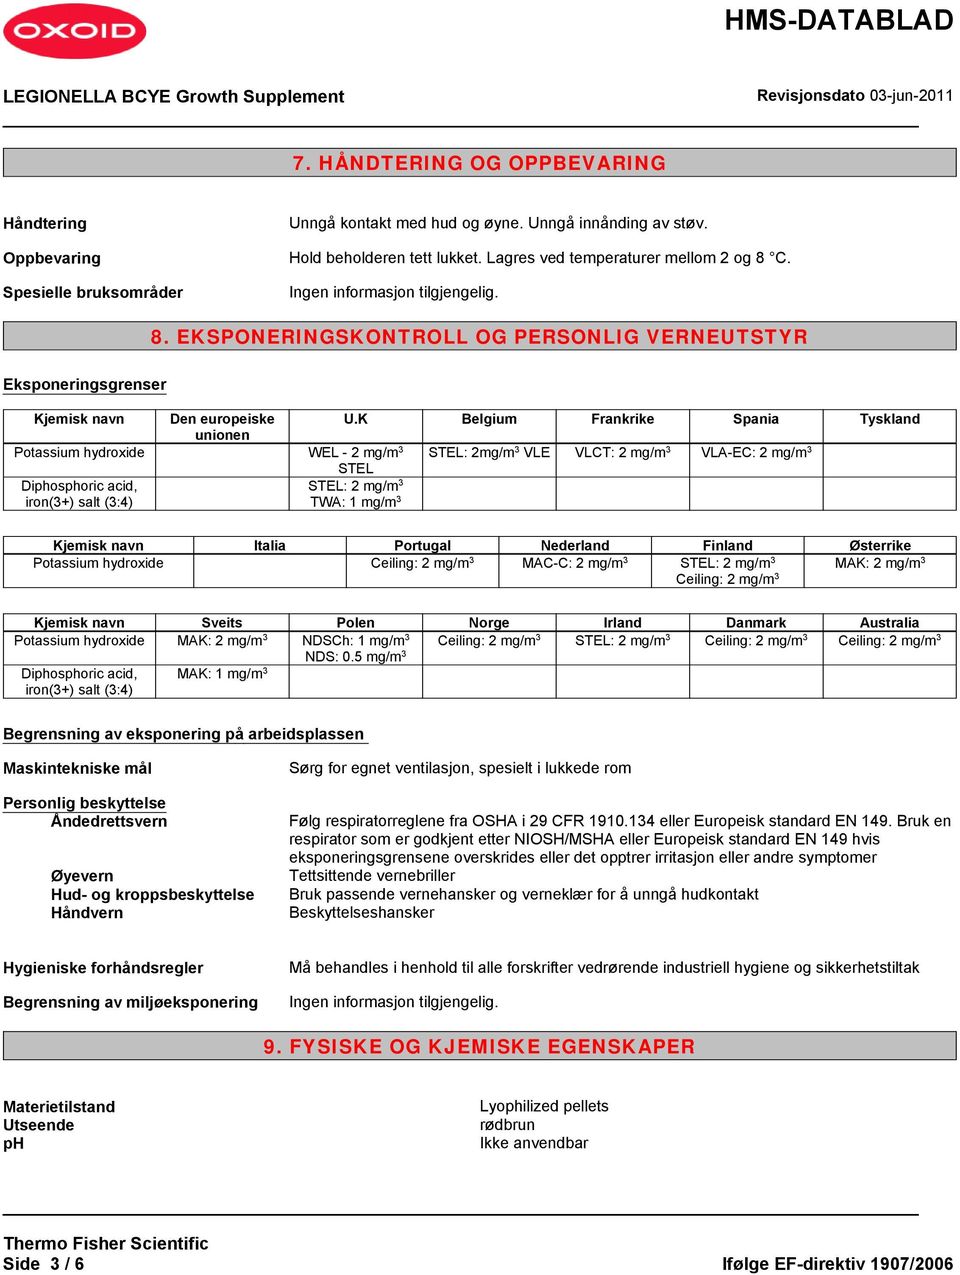 K Belgium Frankrike Spania Tyskland unionen Potassium hydroxide WEL - 2 mg/m 3 STEL: 2mg/m 3 VLE VLCT: 2 mg/m 3 VLA-EC: 2 mg/m 3 STEL Diphosphoric acid, iron(3+) salt (3:4) STEL: 2 mg/m 3 TWA: 1 mg/m